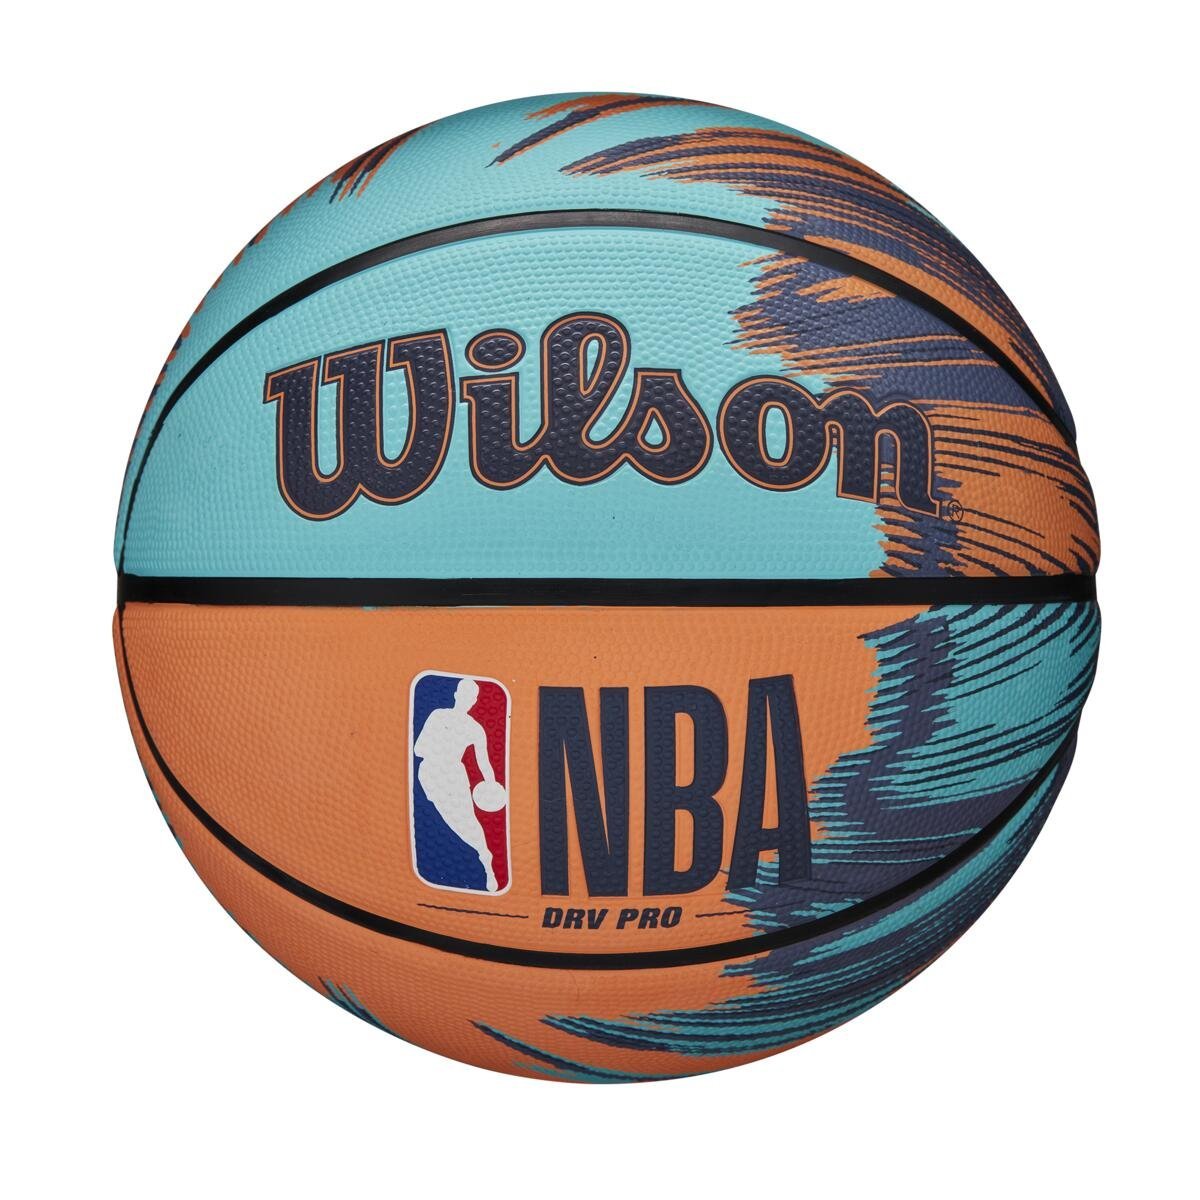 Lopta Wilson NBA Drv Pro Streak Bskt - modrá/oranžová